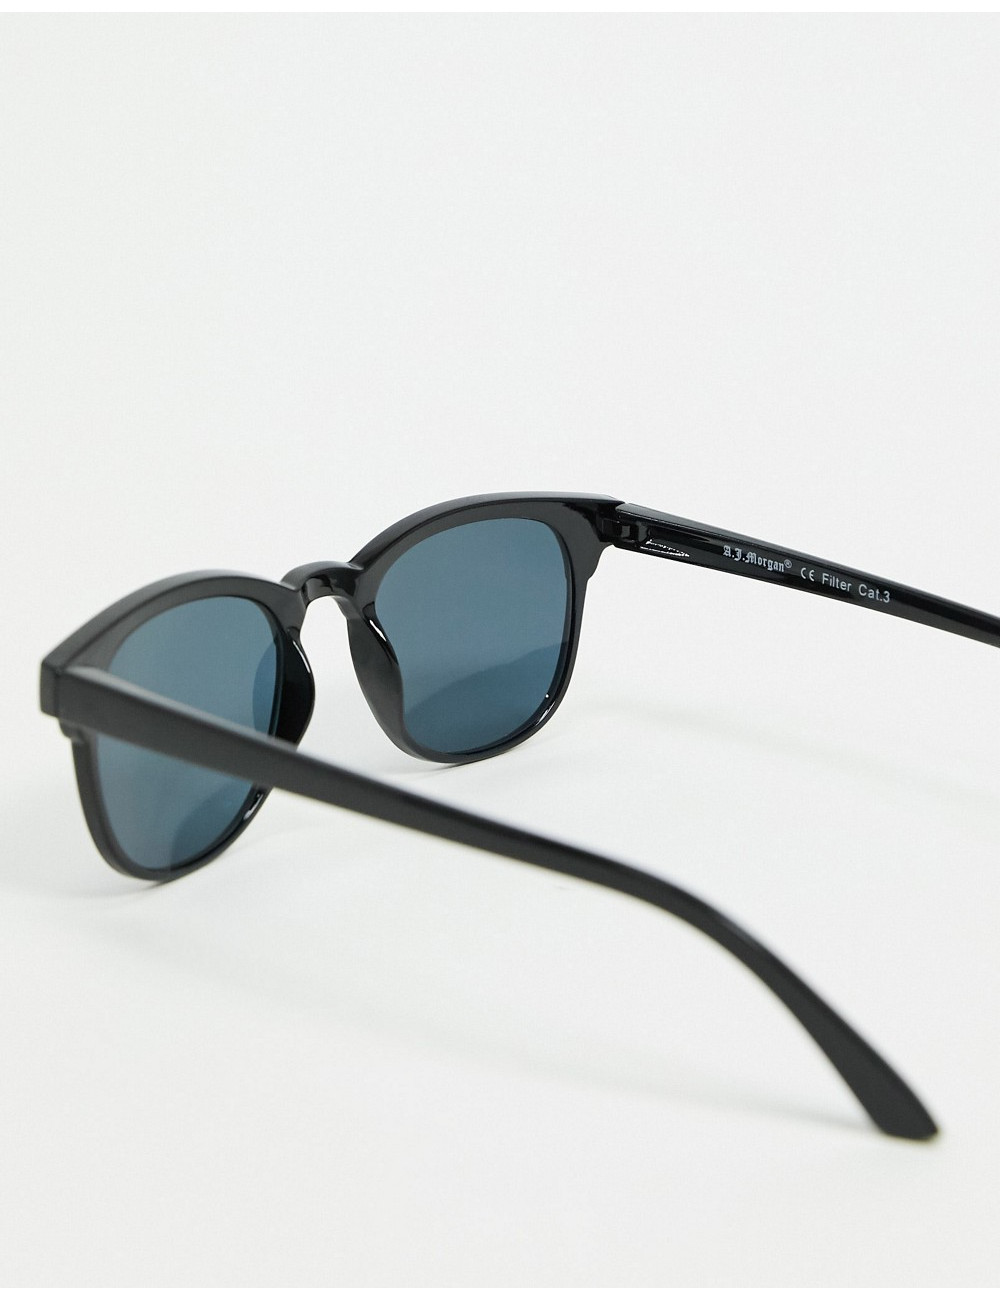 AJ Morgan style sunglasses...